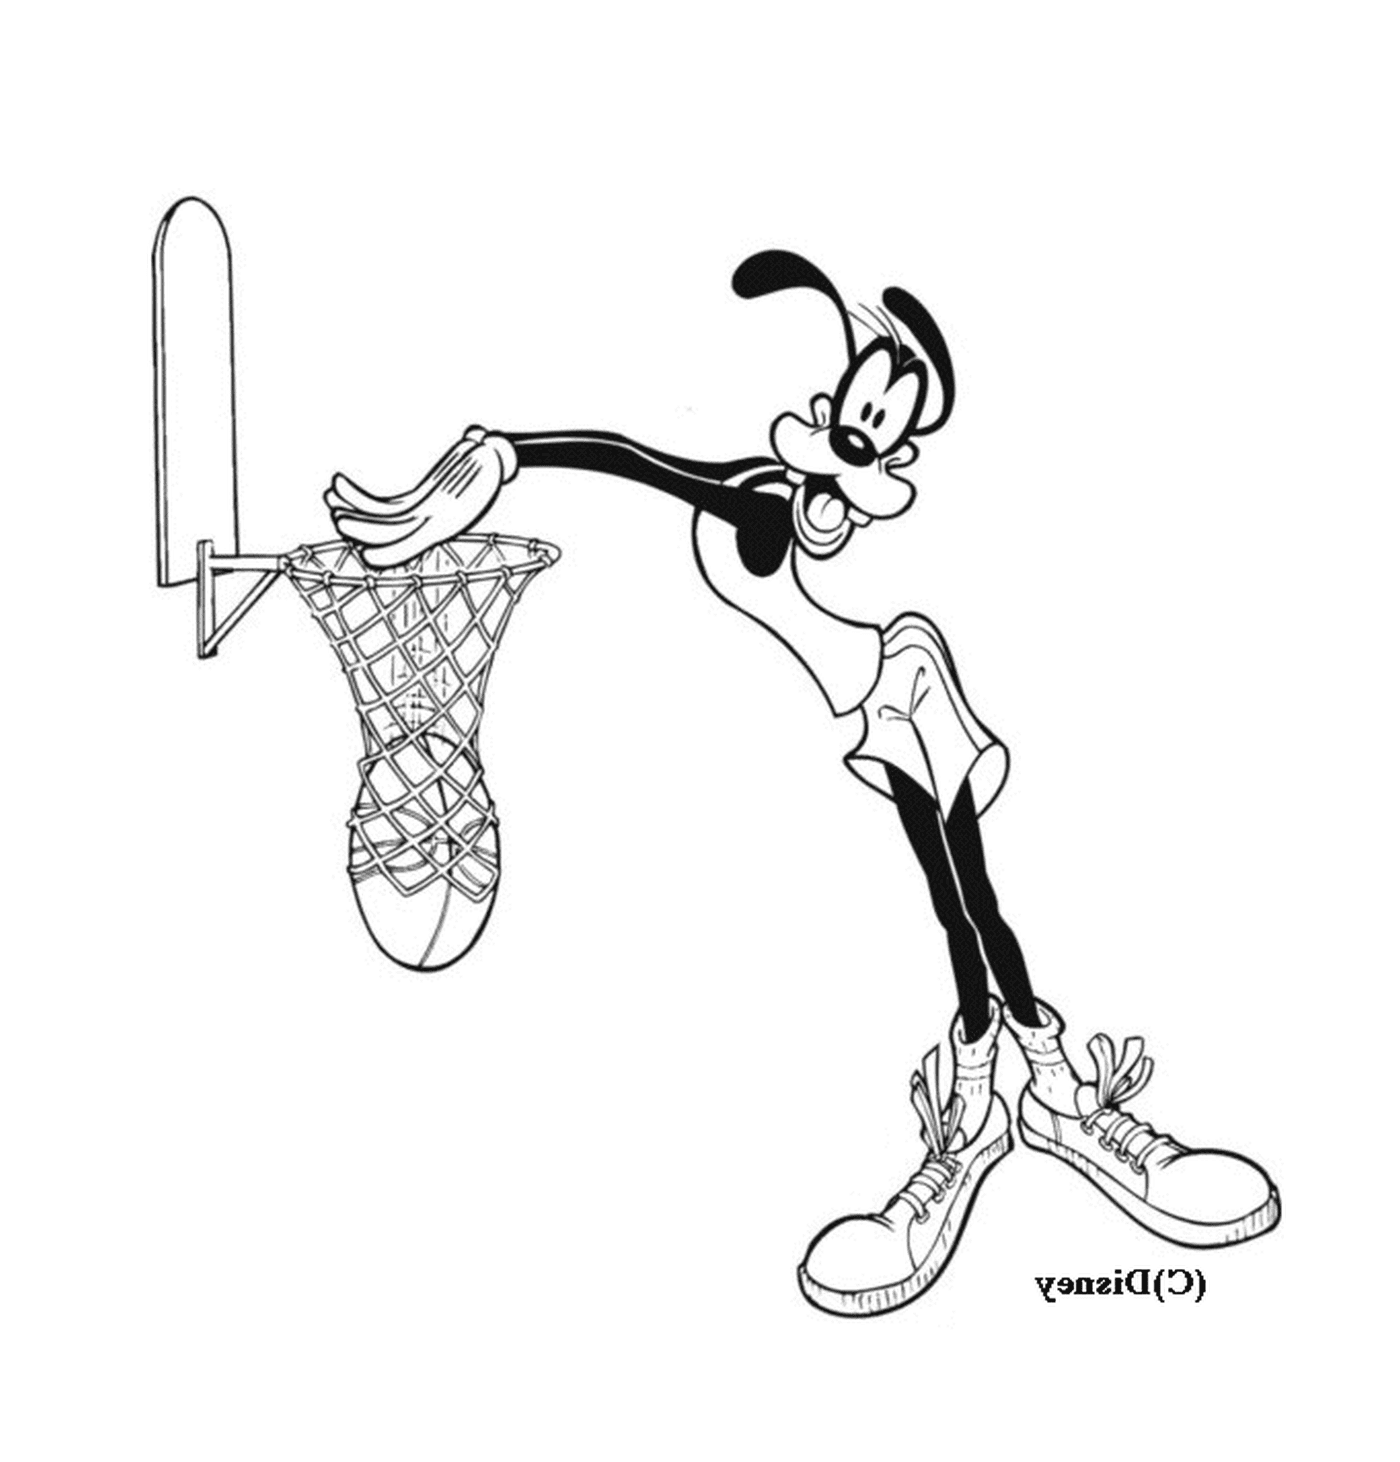   Dingo joue au basketball dans un dessin animé 